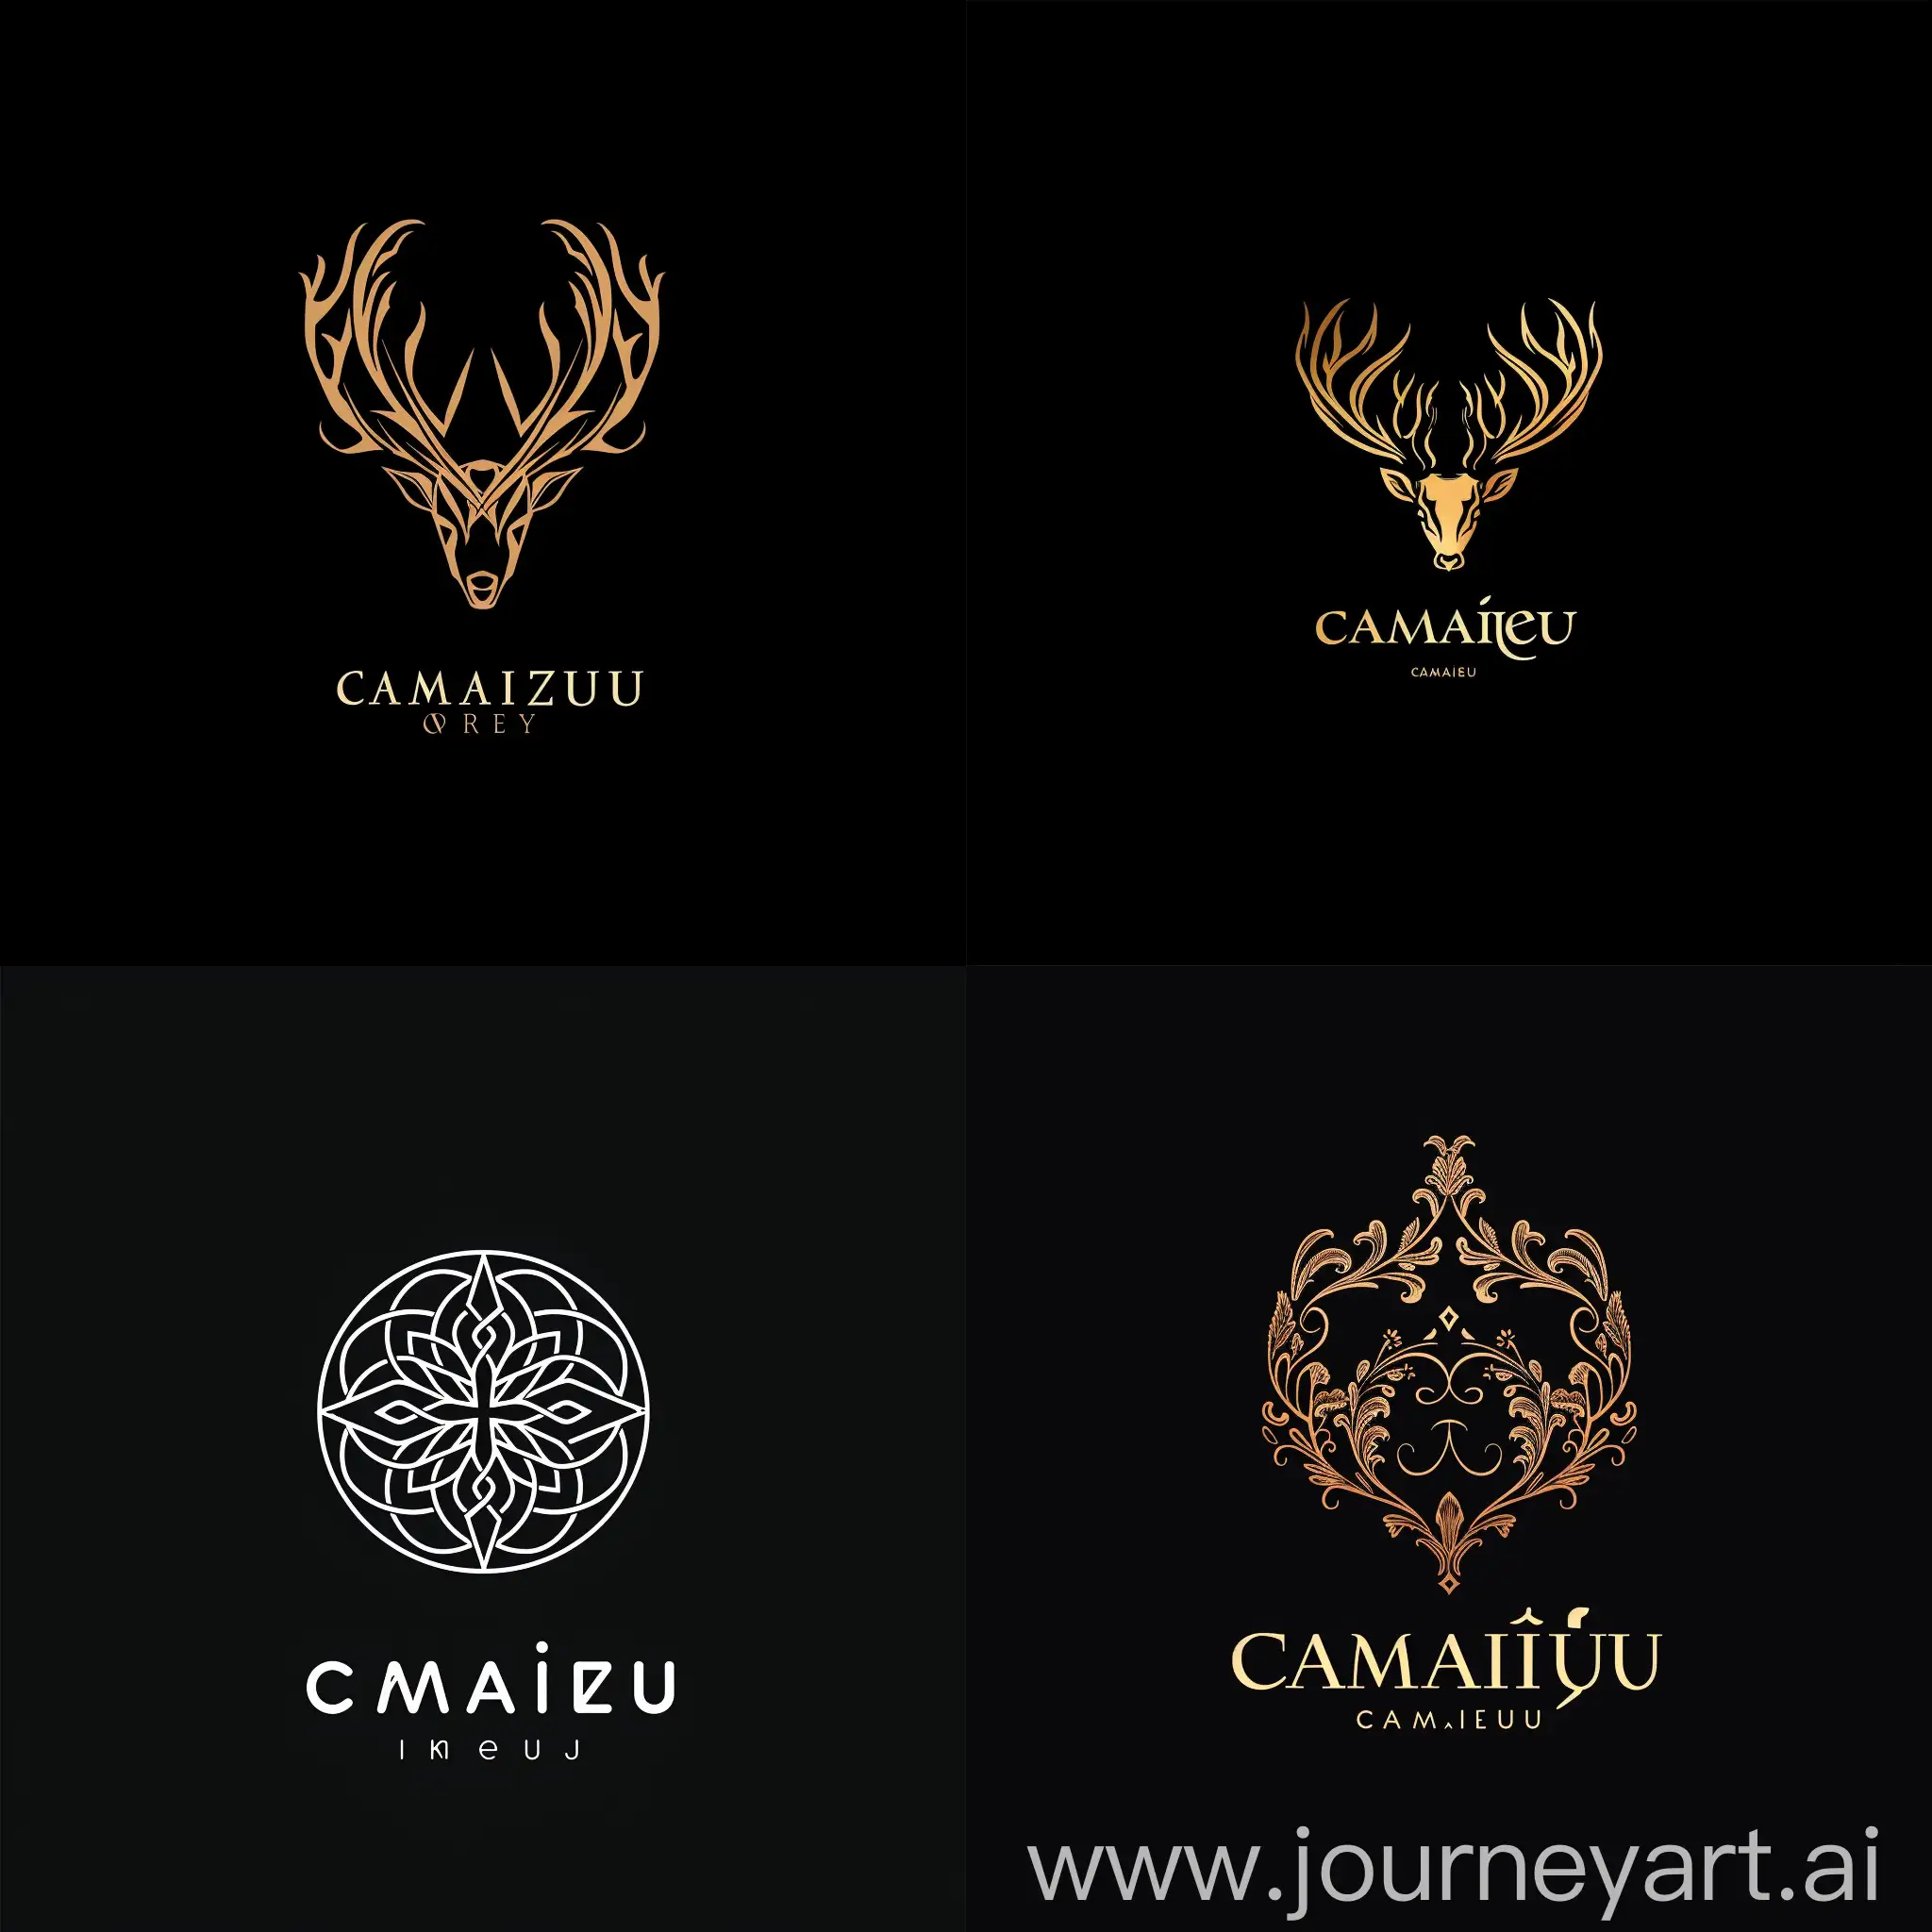 Camaieu-Clothing-Brand-Logo-Design-Vibrant-Style-in-11-Aspect-Ratio